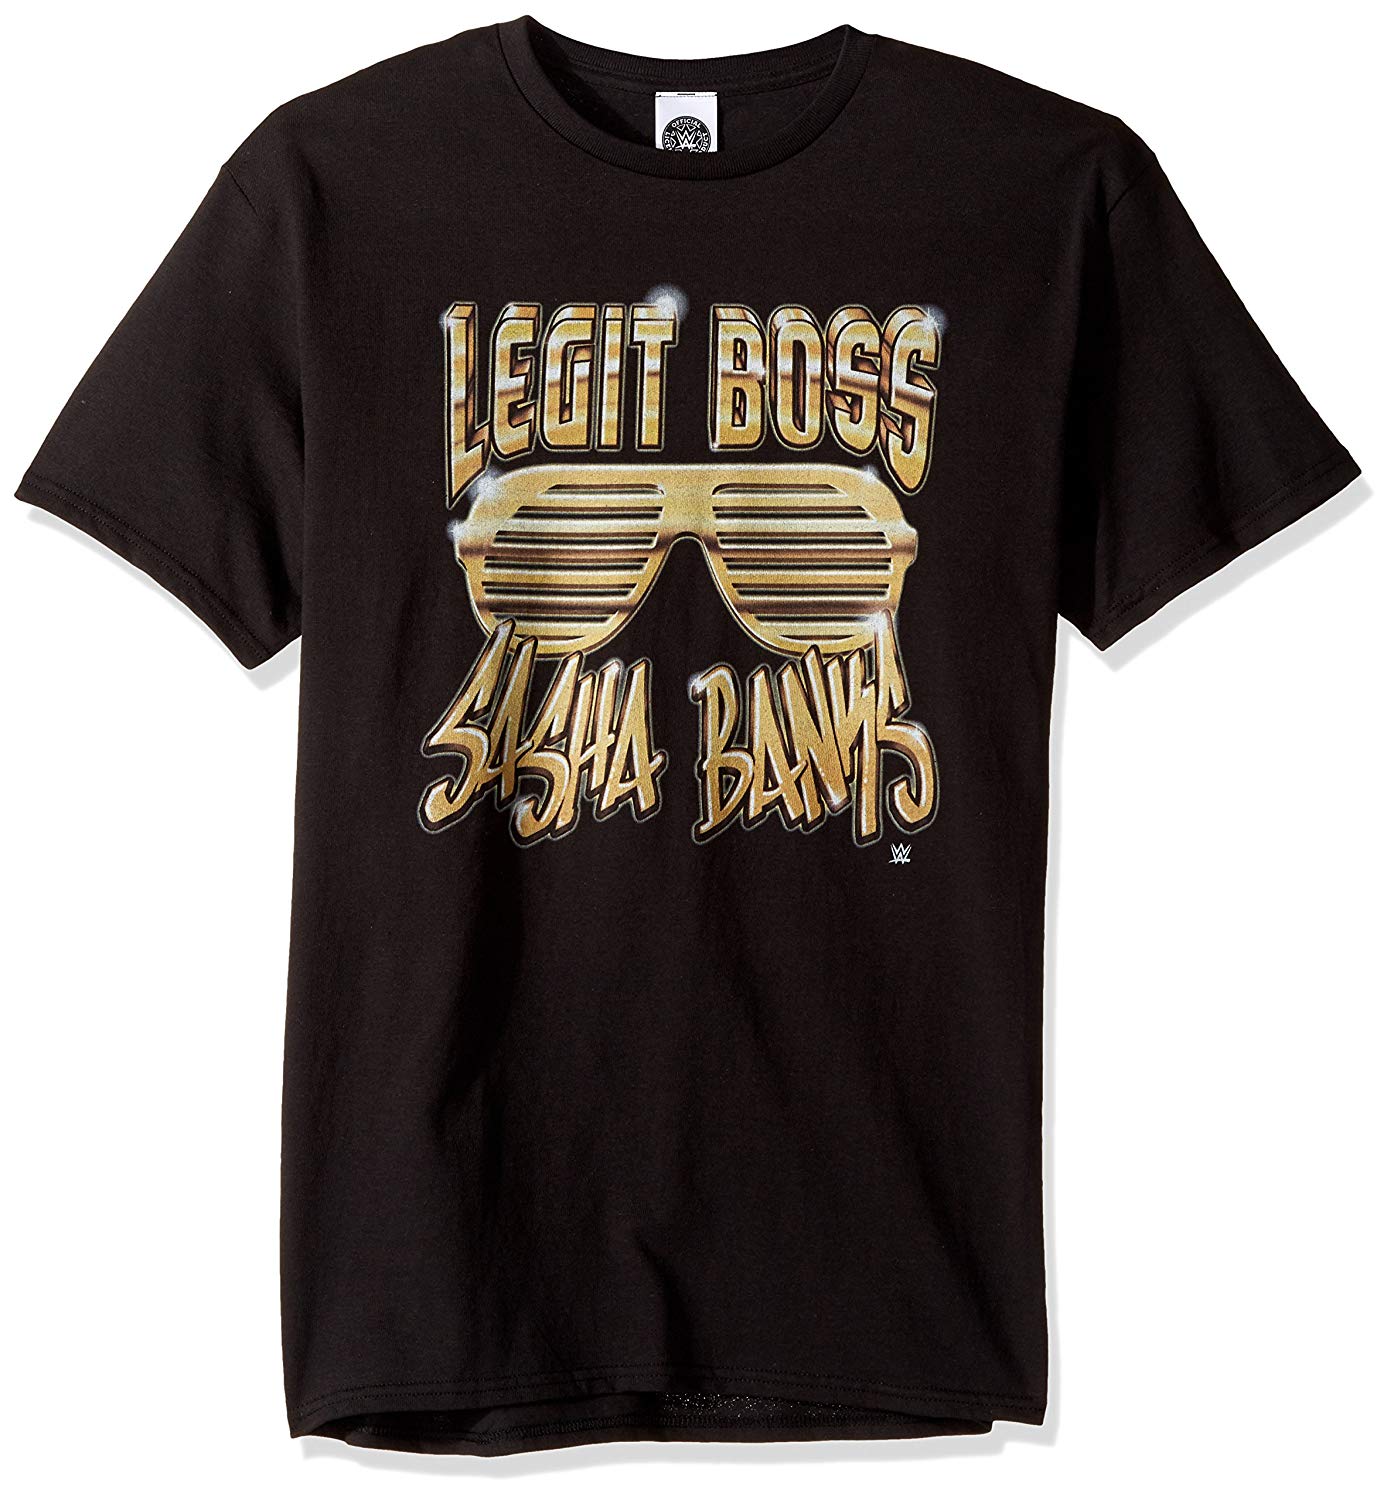 Sasa Bank Logo - Amazon.com: WWE Men's Legit Boss Sasha Banks T-Shirt: Clothing